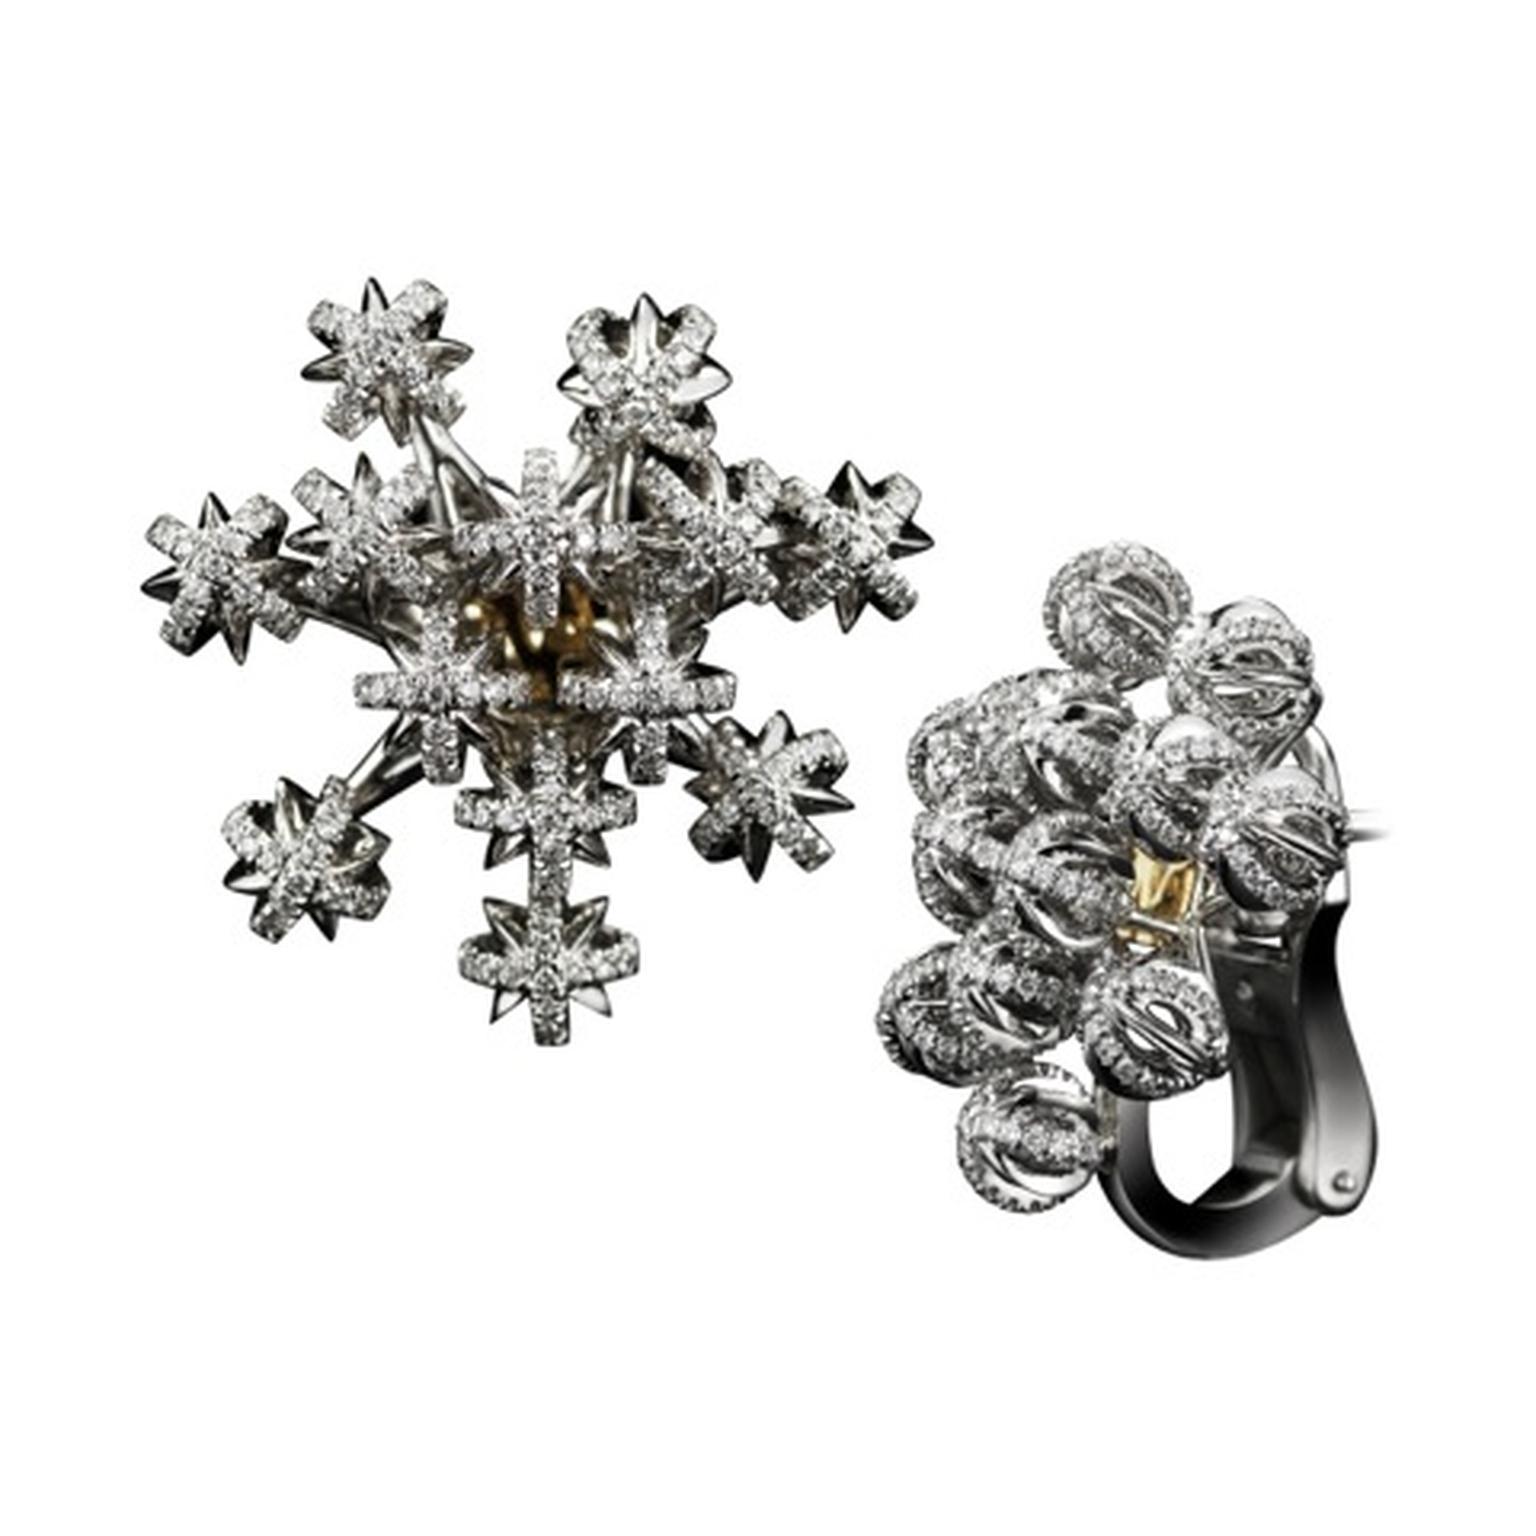 Alexandra Mor_Dome Snowflake Charms earrings HighRez  White BG Full_Side view_ AMEAR2038-01_B.jpg